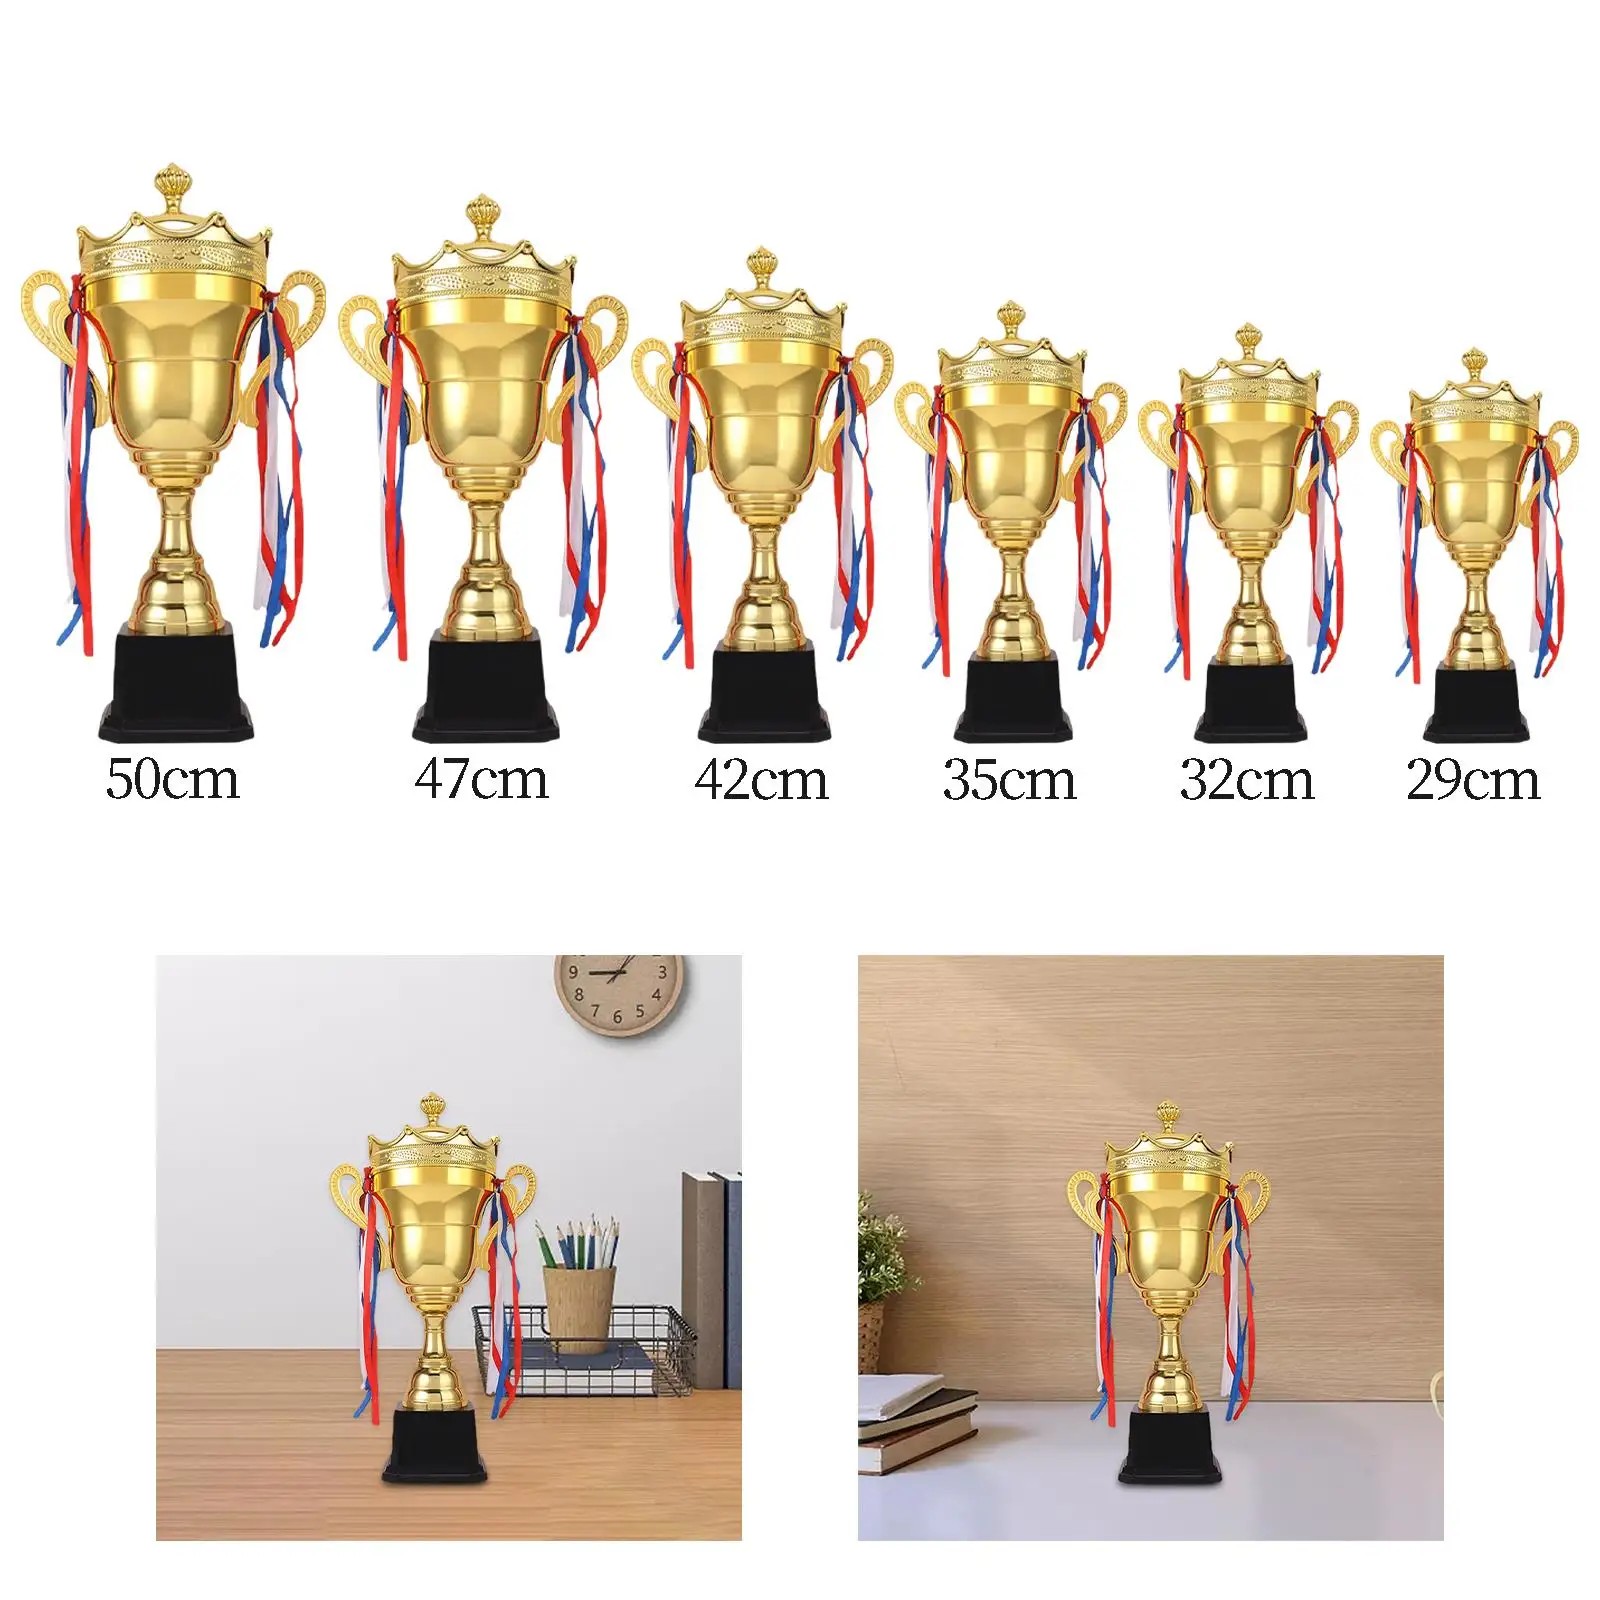 Award Trophy Metal Rewards Keepsake for Soccer Football League Match